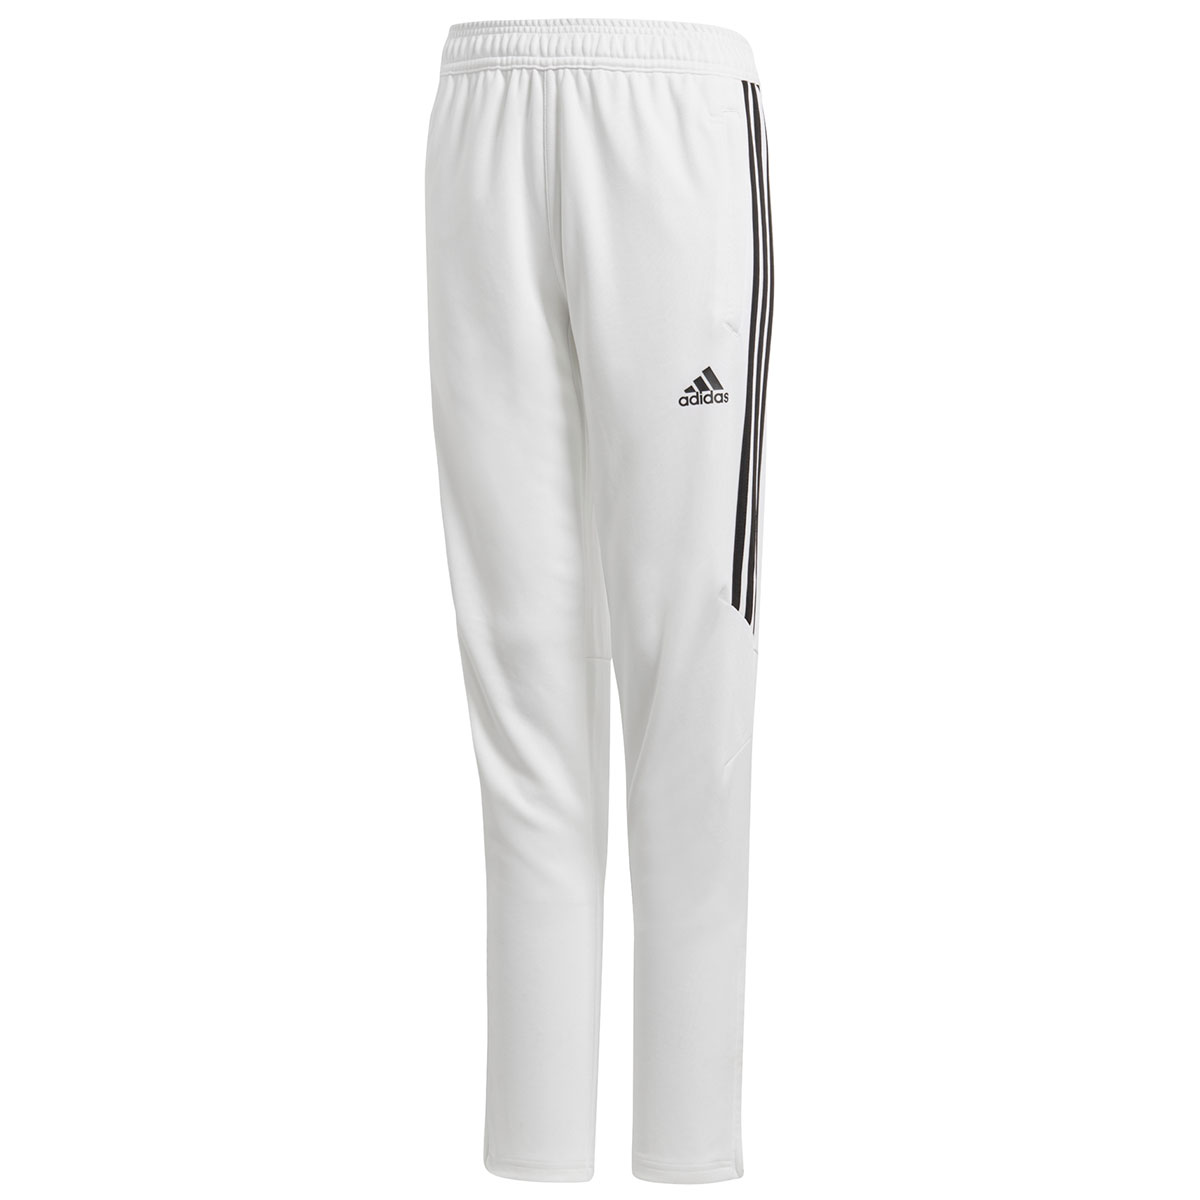 Adidas Boys' Tiro 17 Training Pants - White, XL